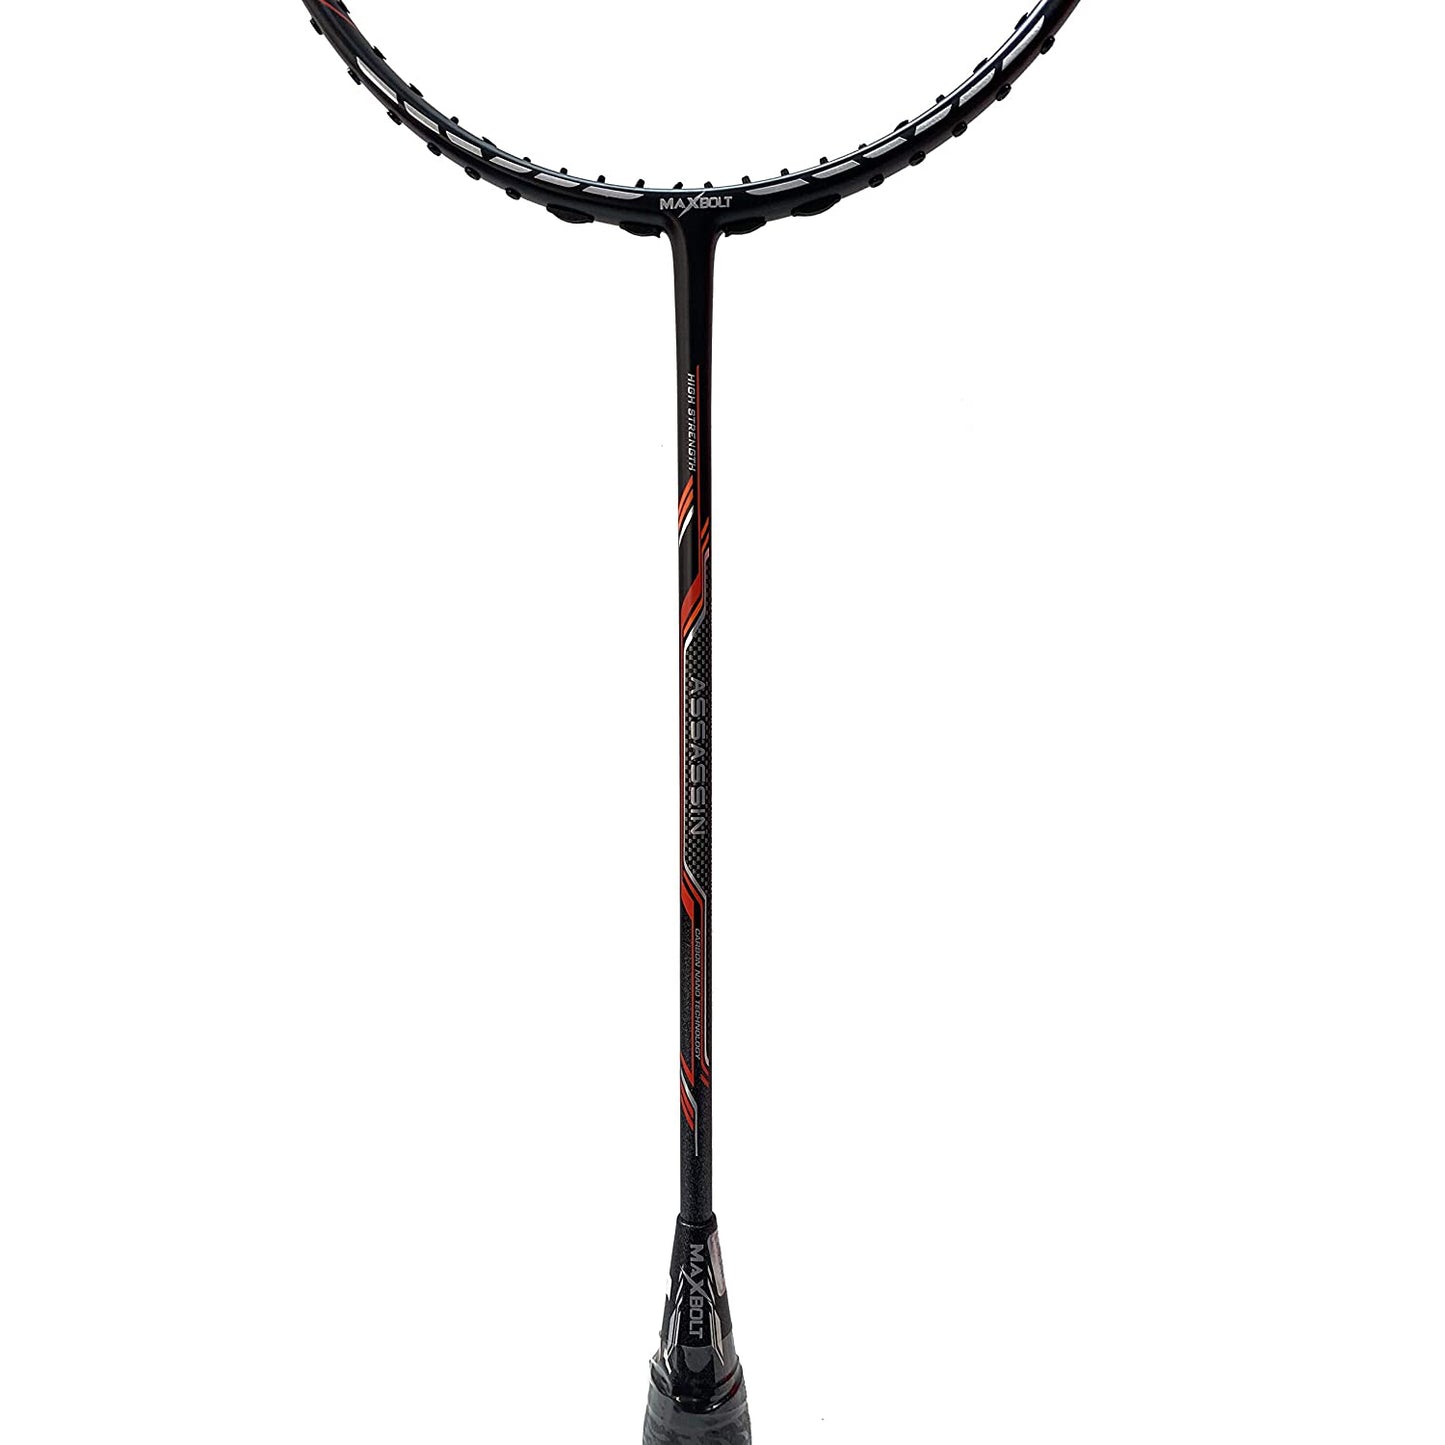 Maxbolt Assassin Unstrung Badminton Racquet, Black/Red - Best Price online Prokicksports.com